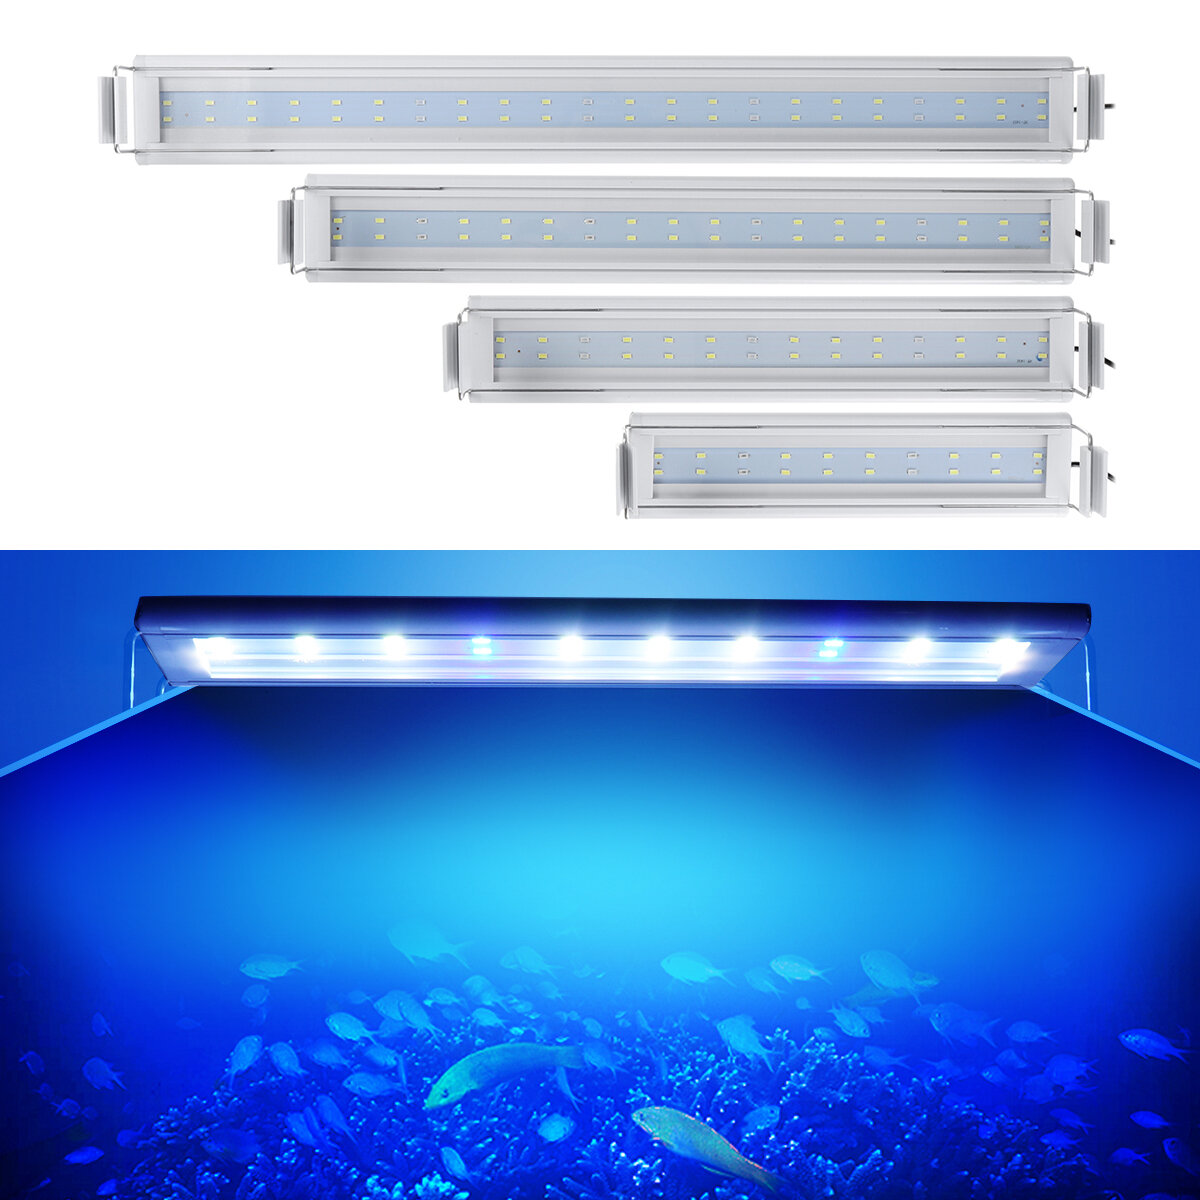 3/5/7/9W 220V US Plug Fish Tank Lamp LED Energy-Saving Blue+White Light Line Switch